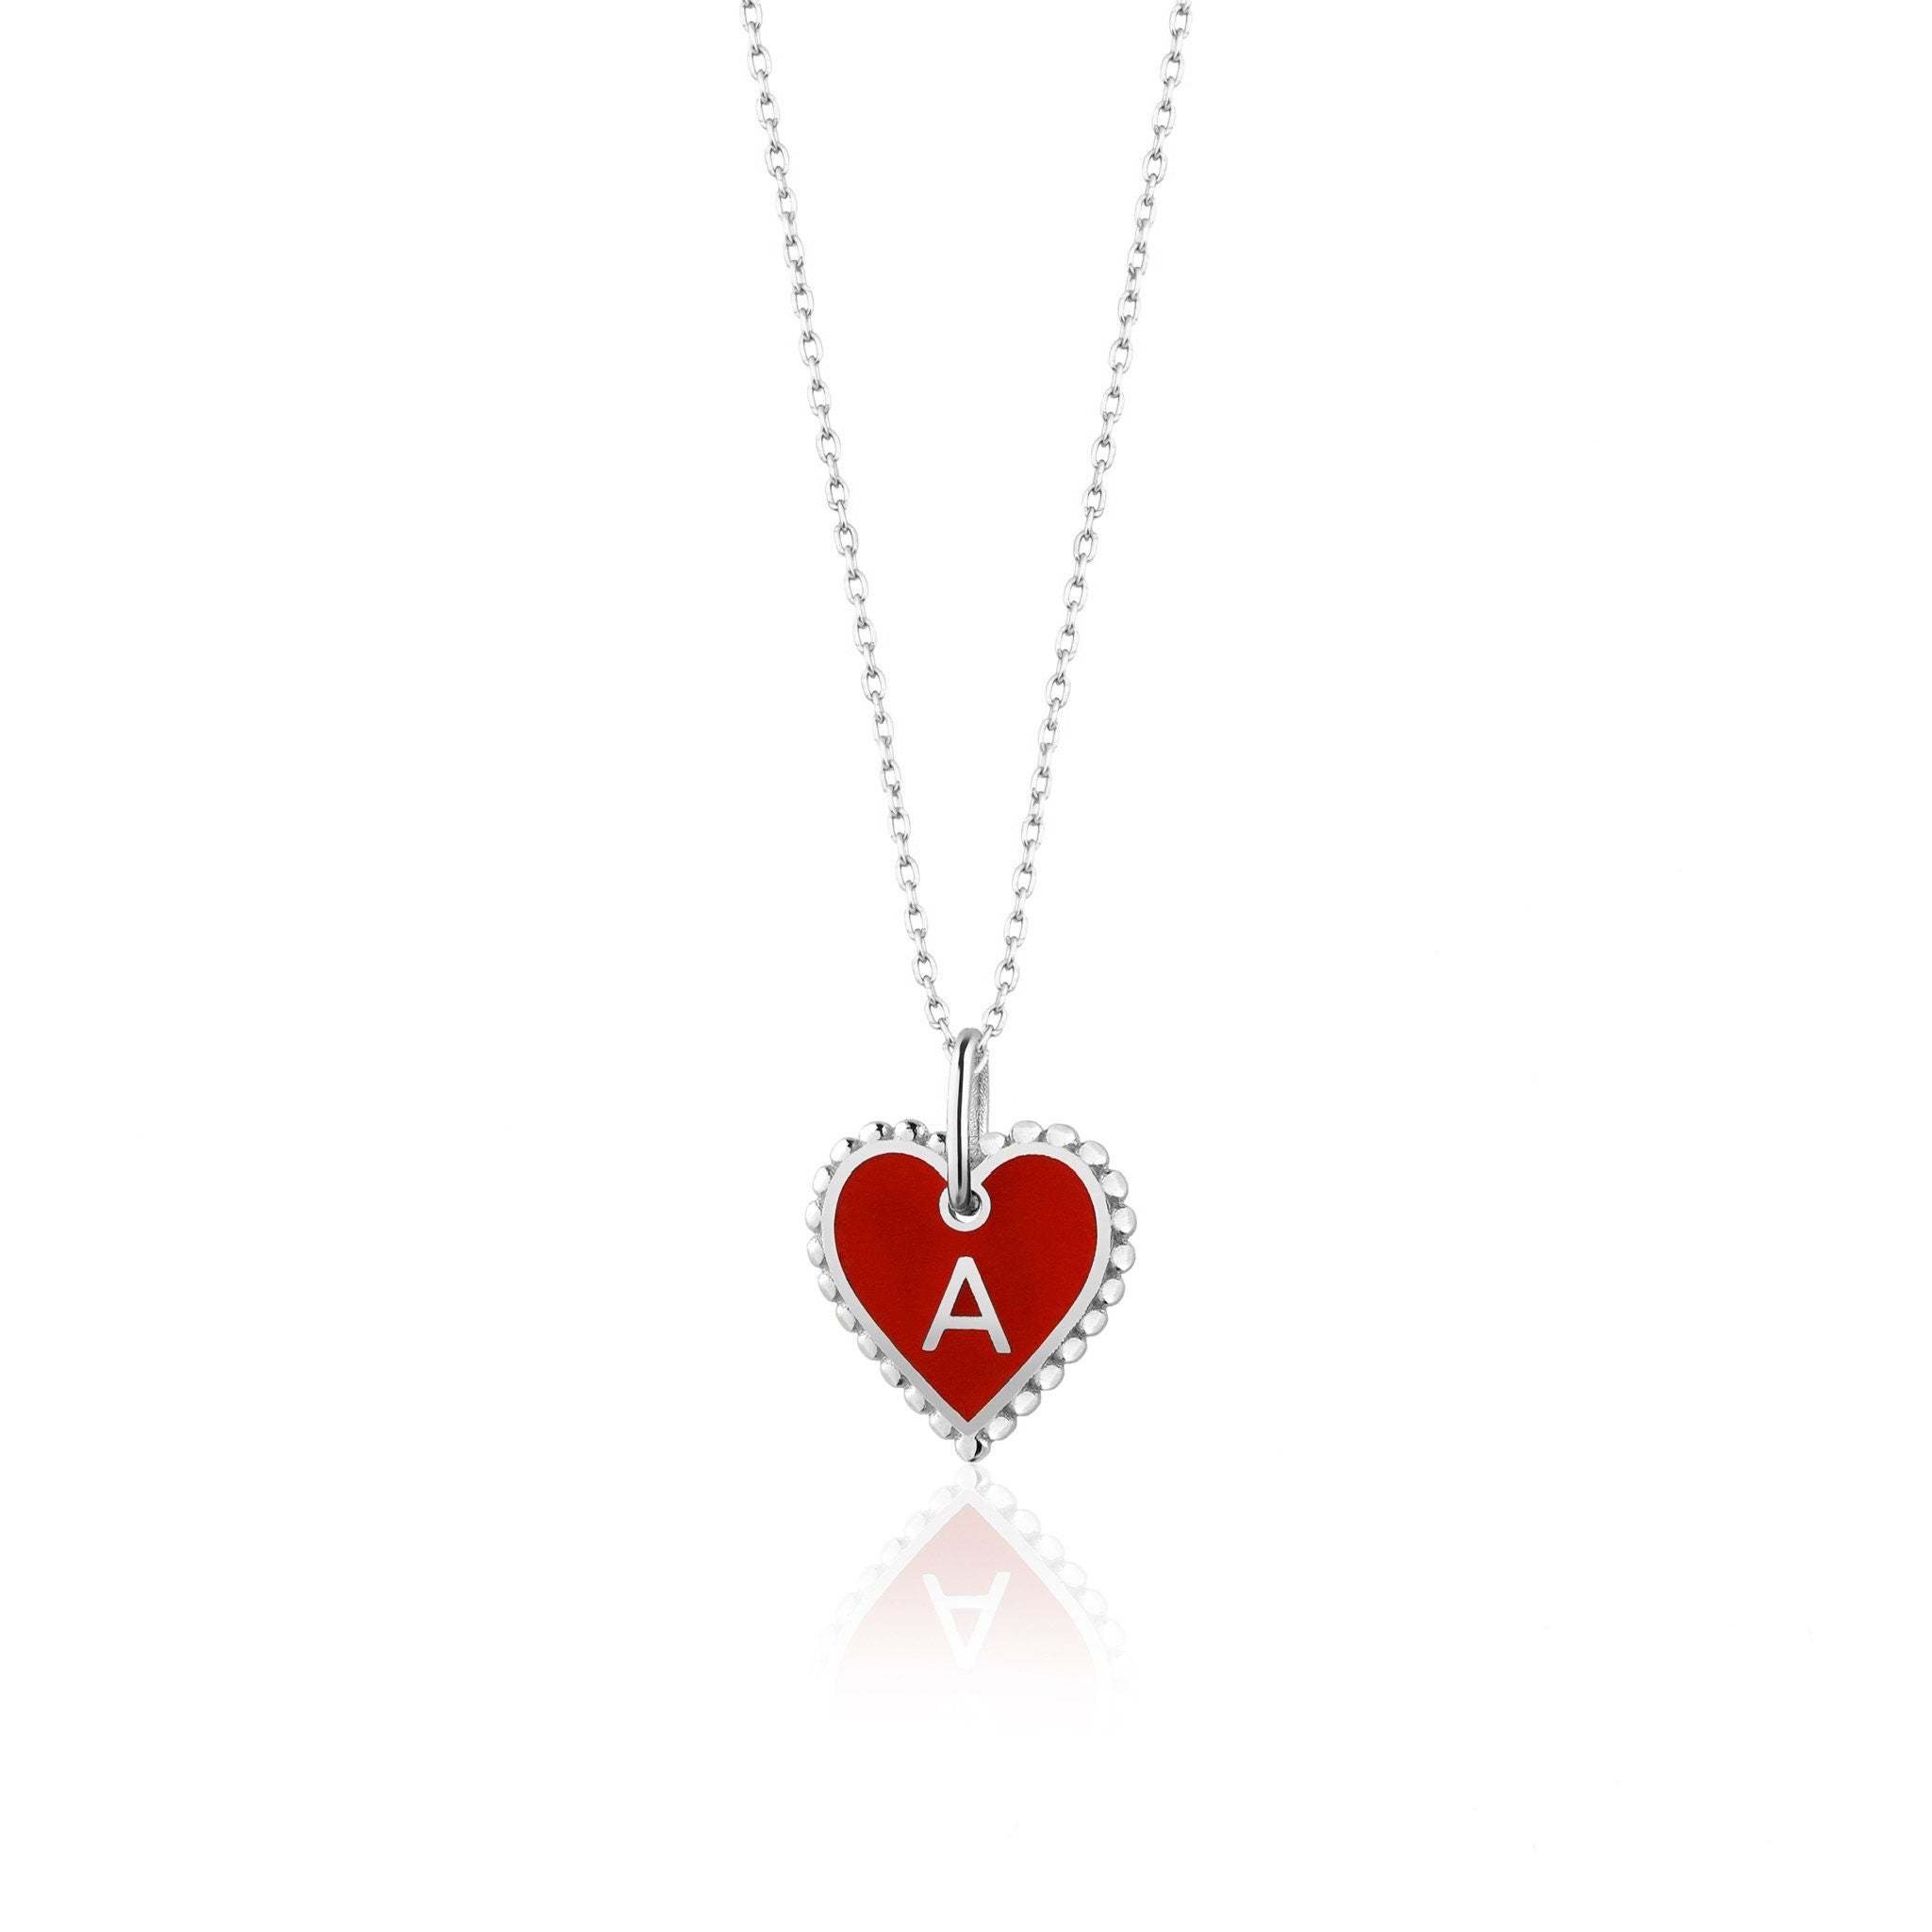 Red Enamel Heart Pendant Necklace in 14K Gold